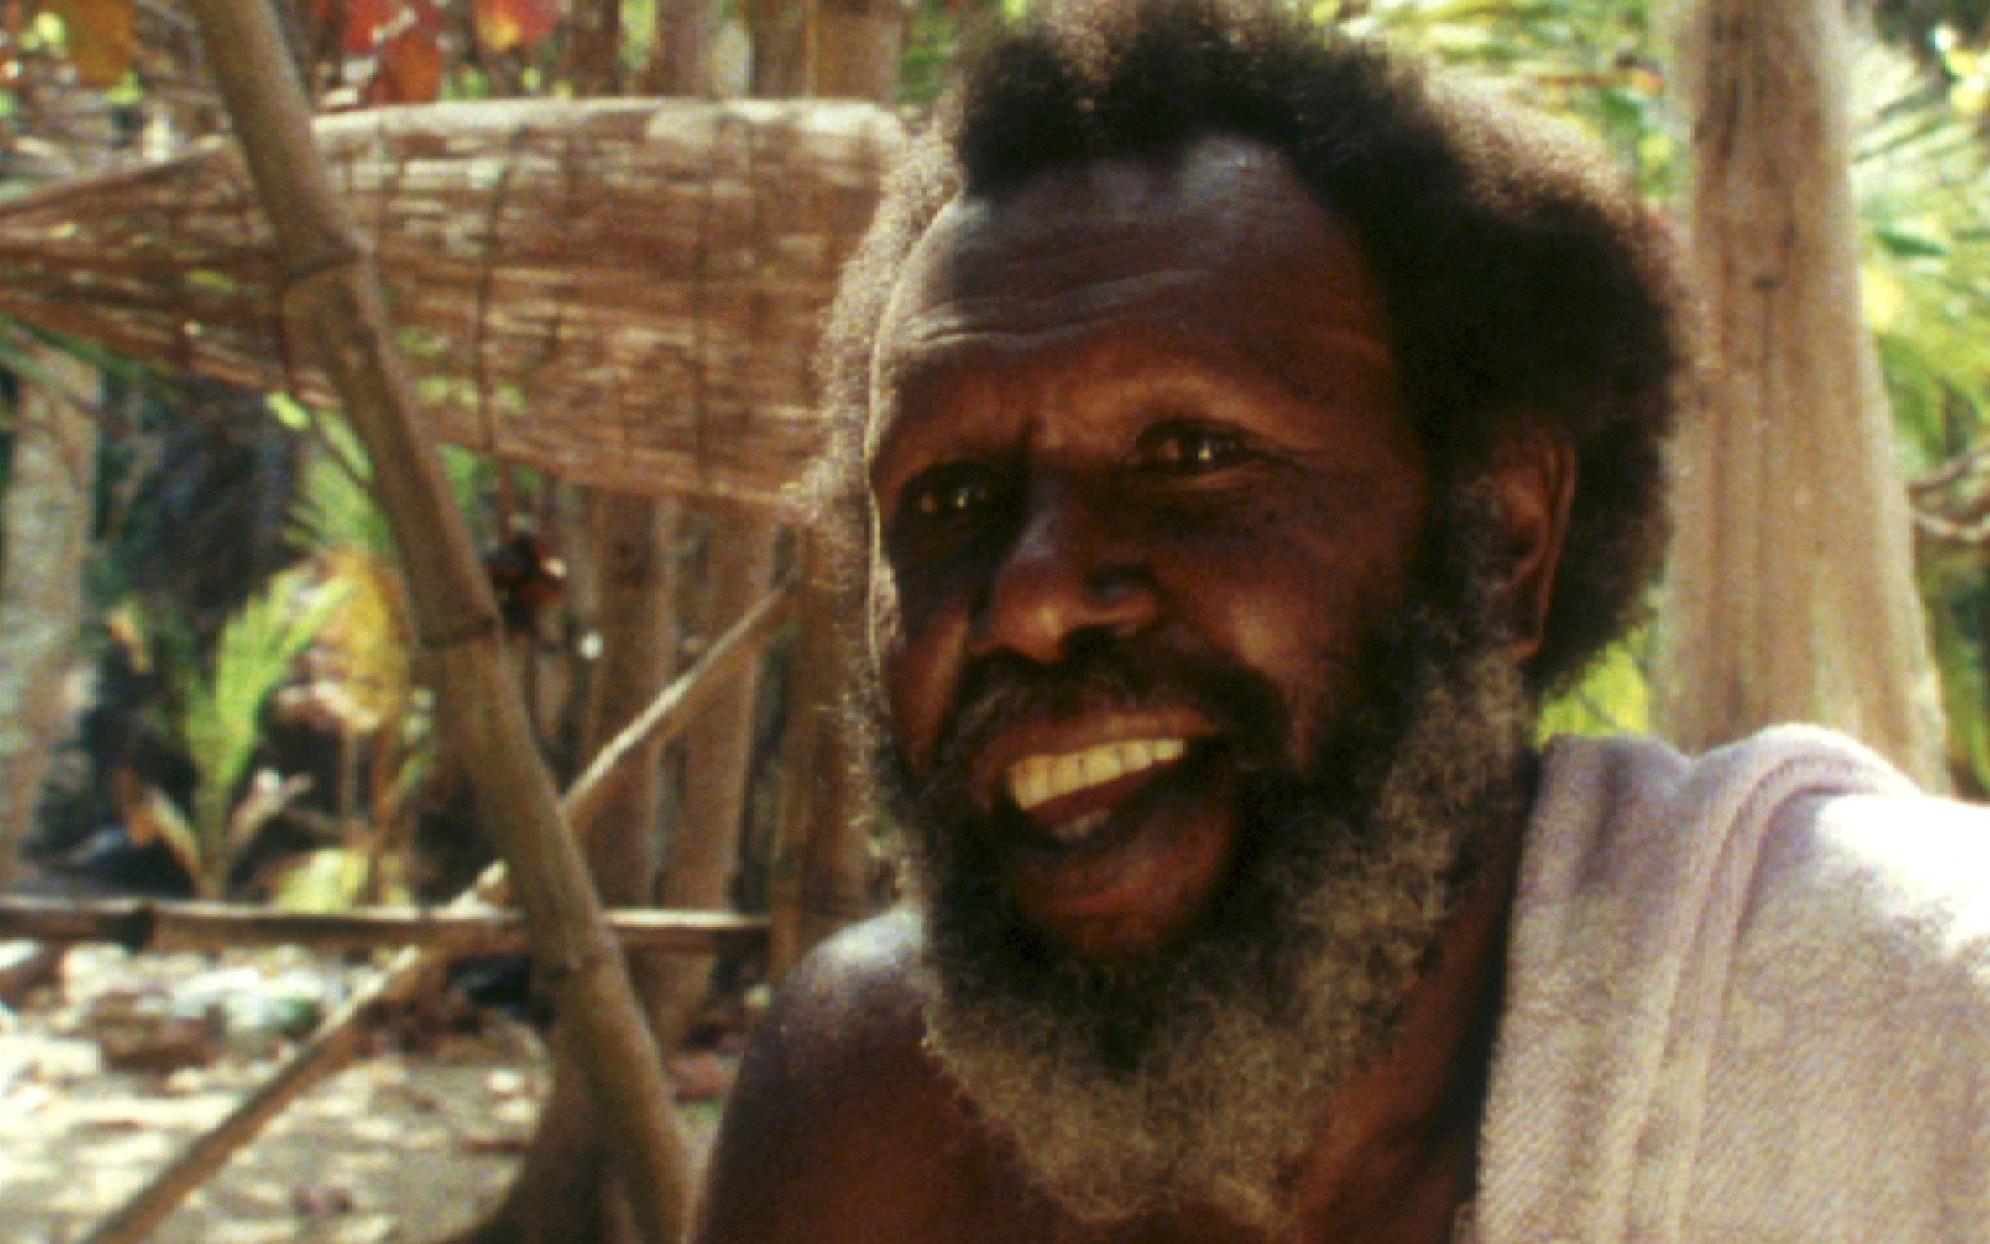 Eddie Koiki Mabo at Las, on Mer (Murray Island), 1989.